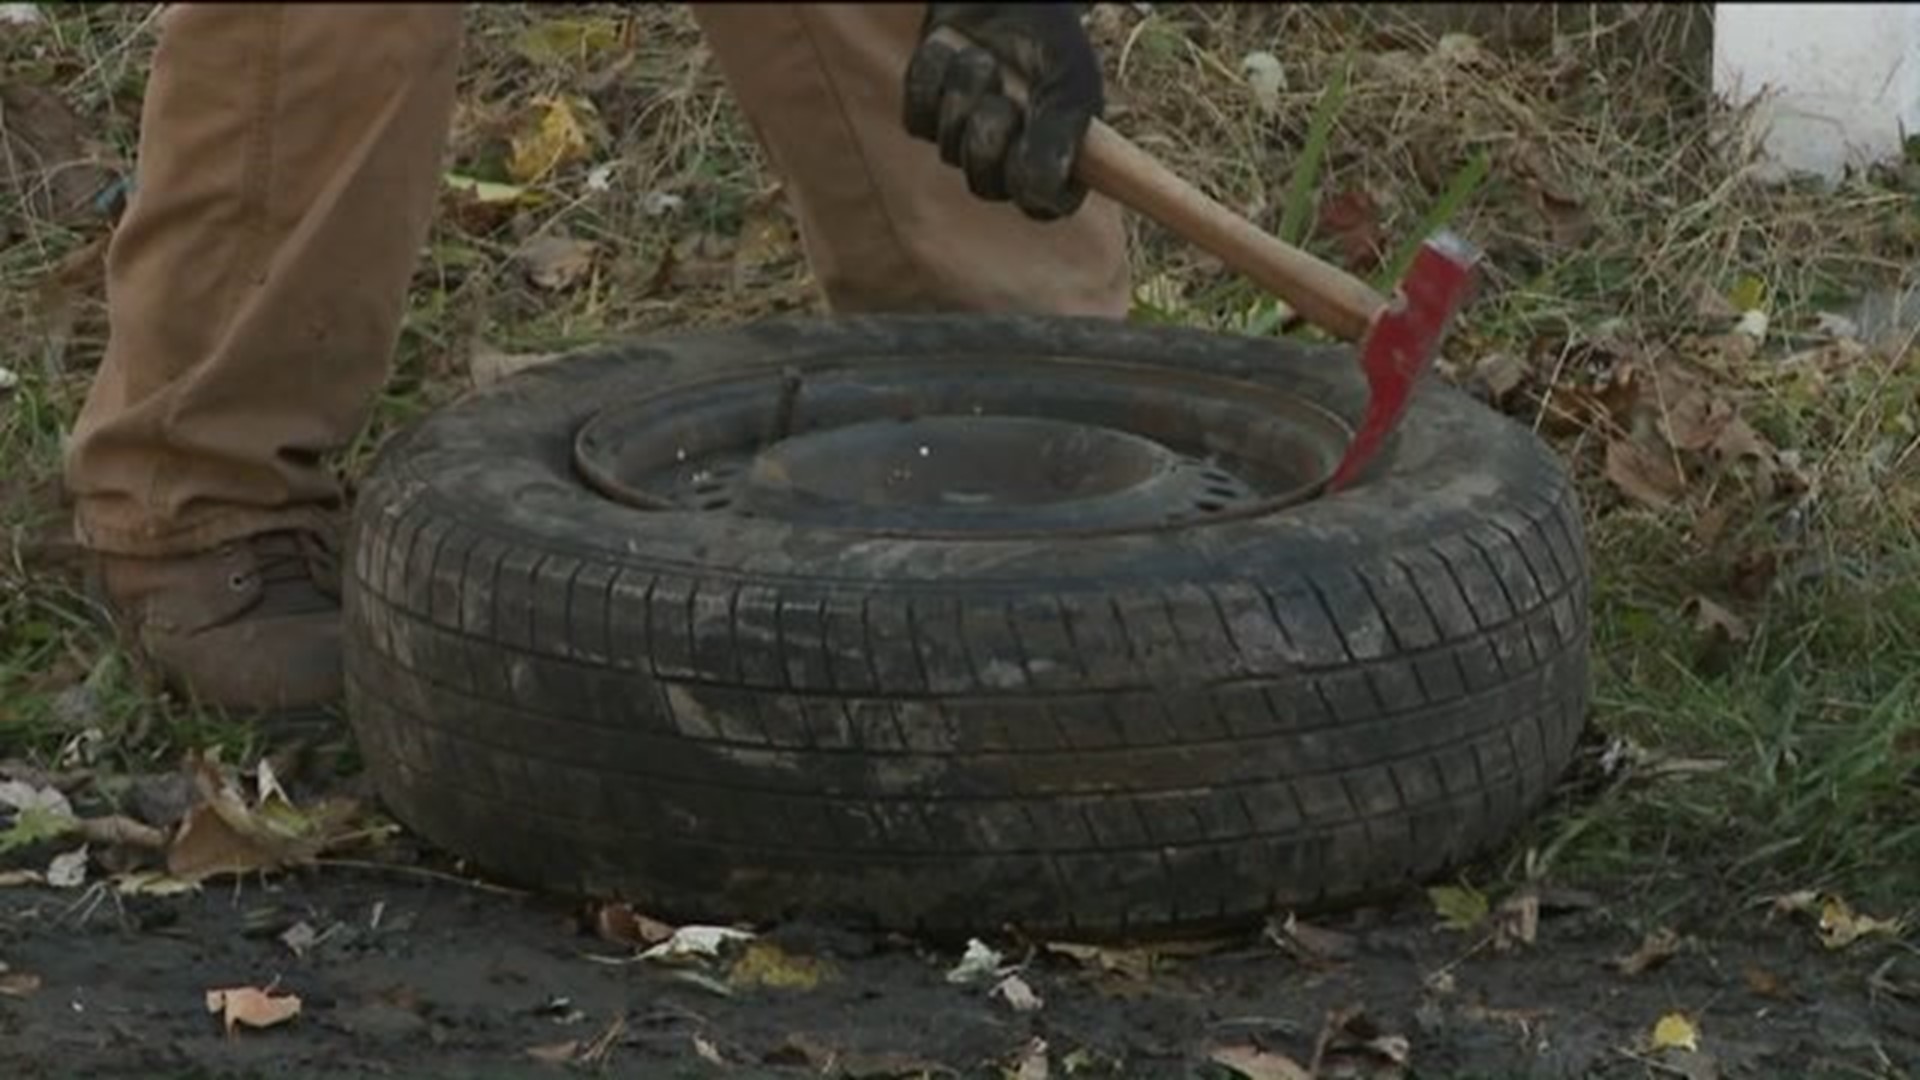 Illegal Tire Dump Cleaned Up in Scranton